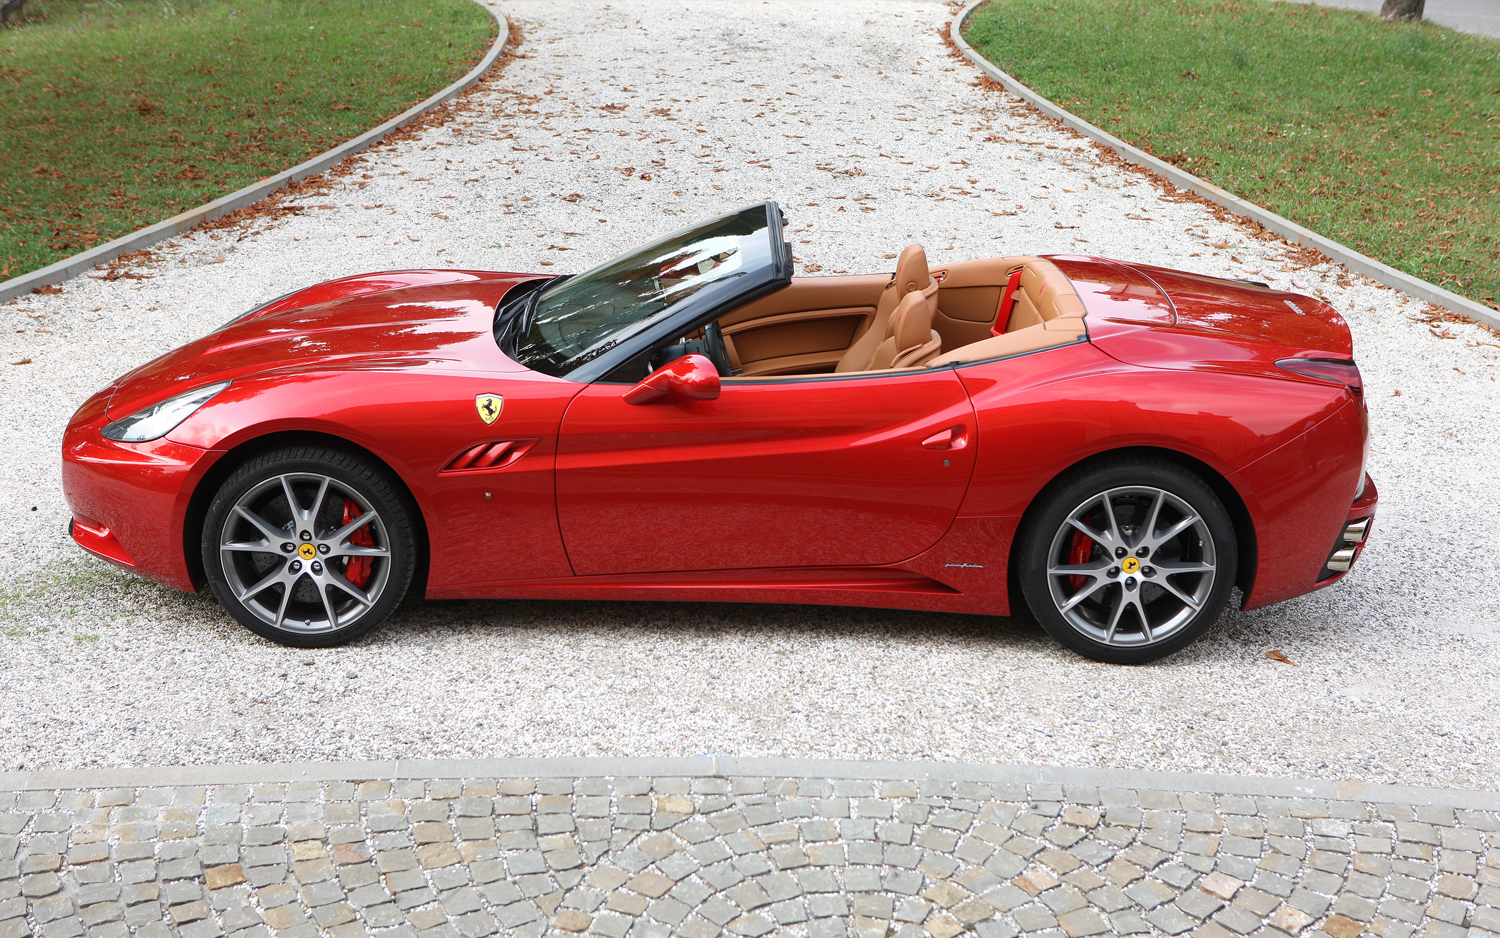 Ferrari-California-side-convertible-top-down